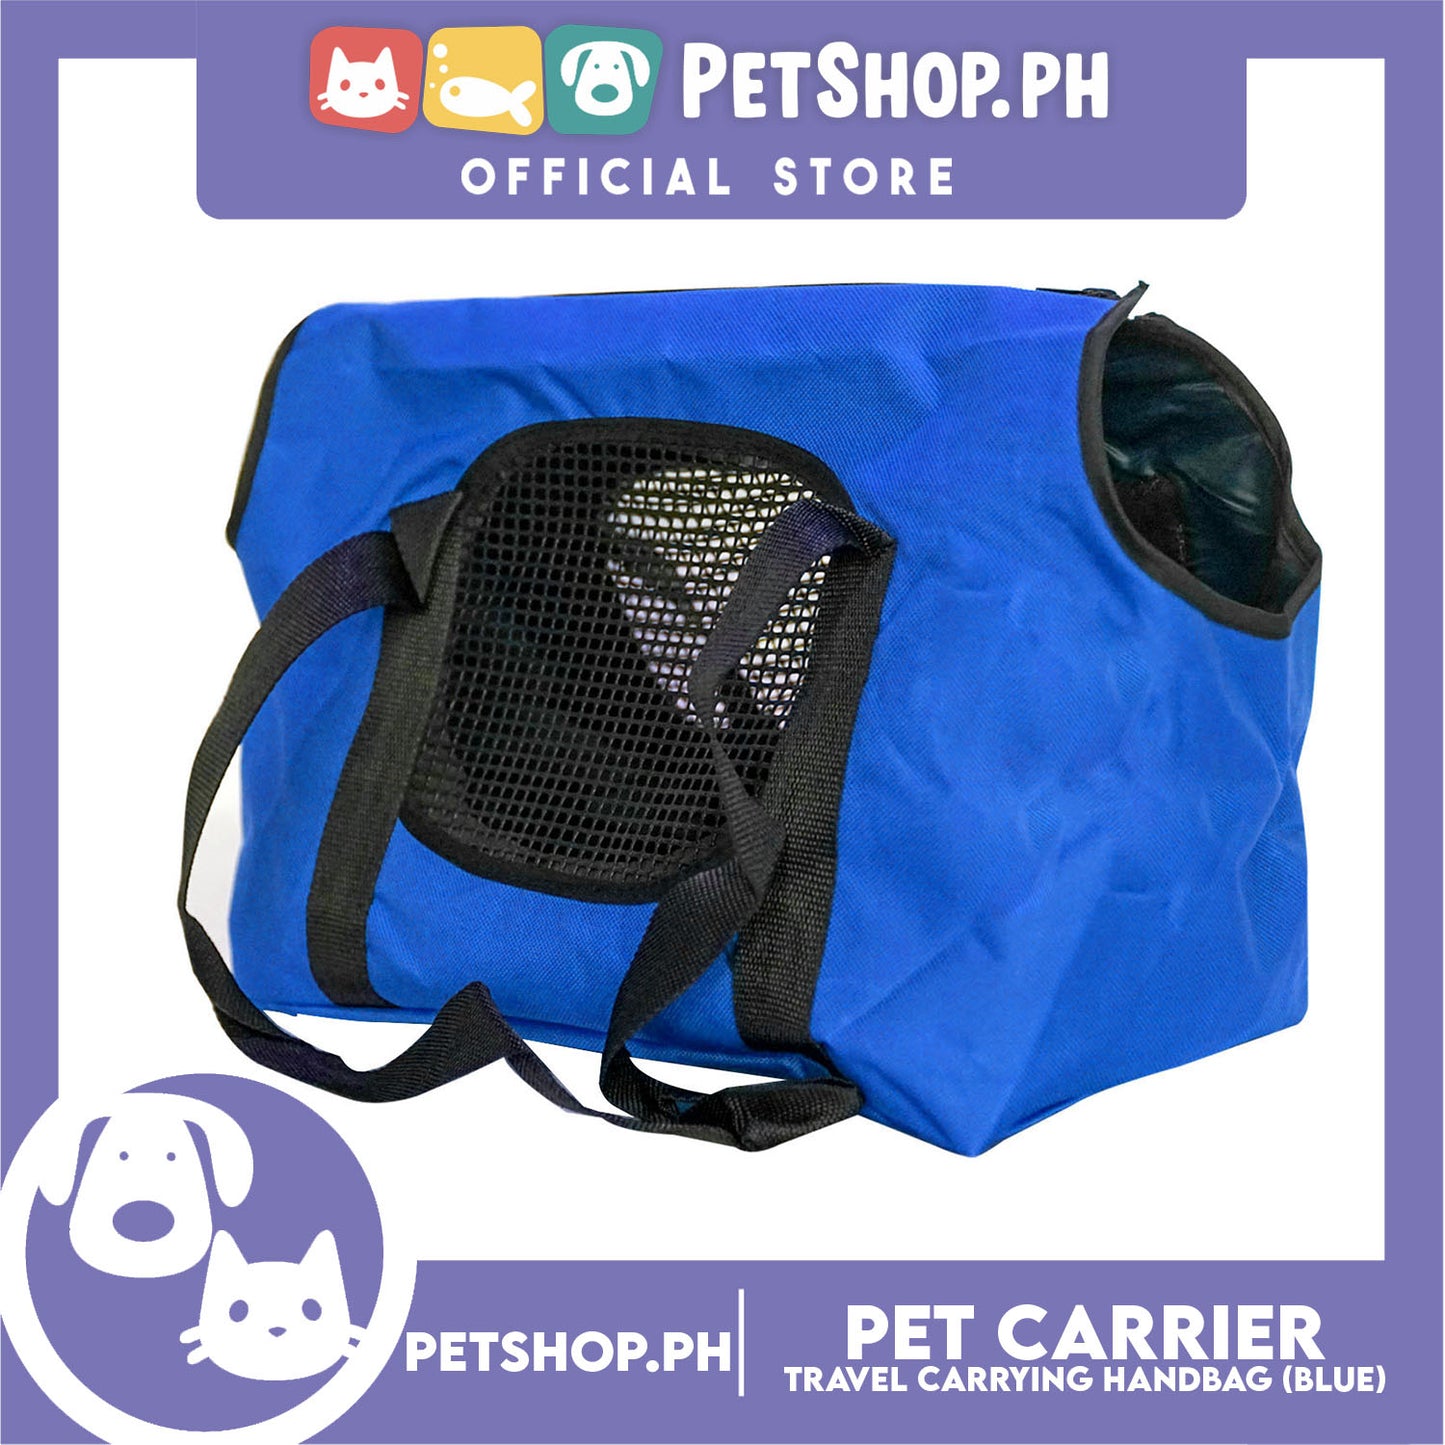 Pet Carrier Summer Travel Carrying Handbag, Shoulder Bag L36 x W18 x H26 Medium (Blue)